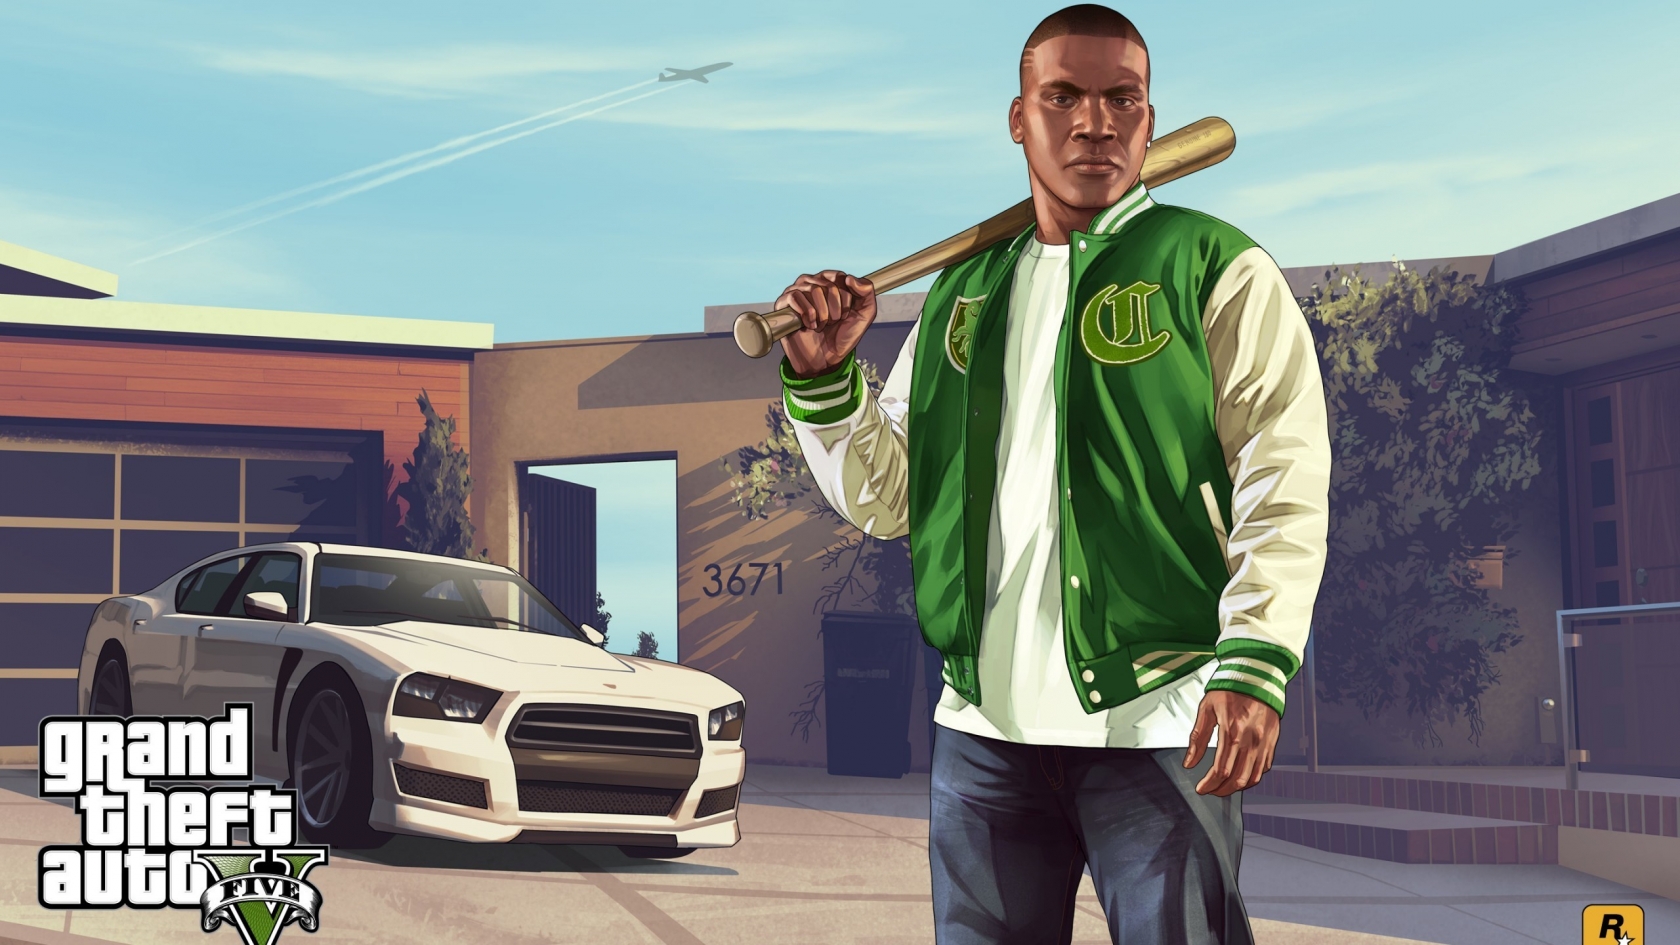 Grand Theft Auto V for 1680 x 945 HDTV resolution